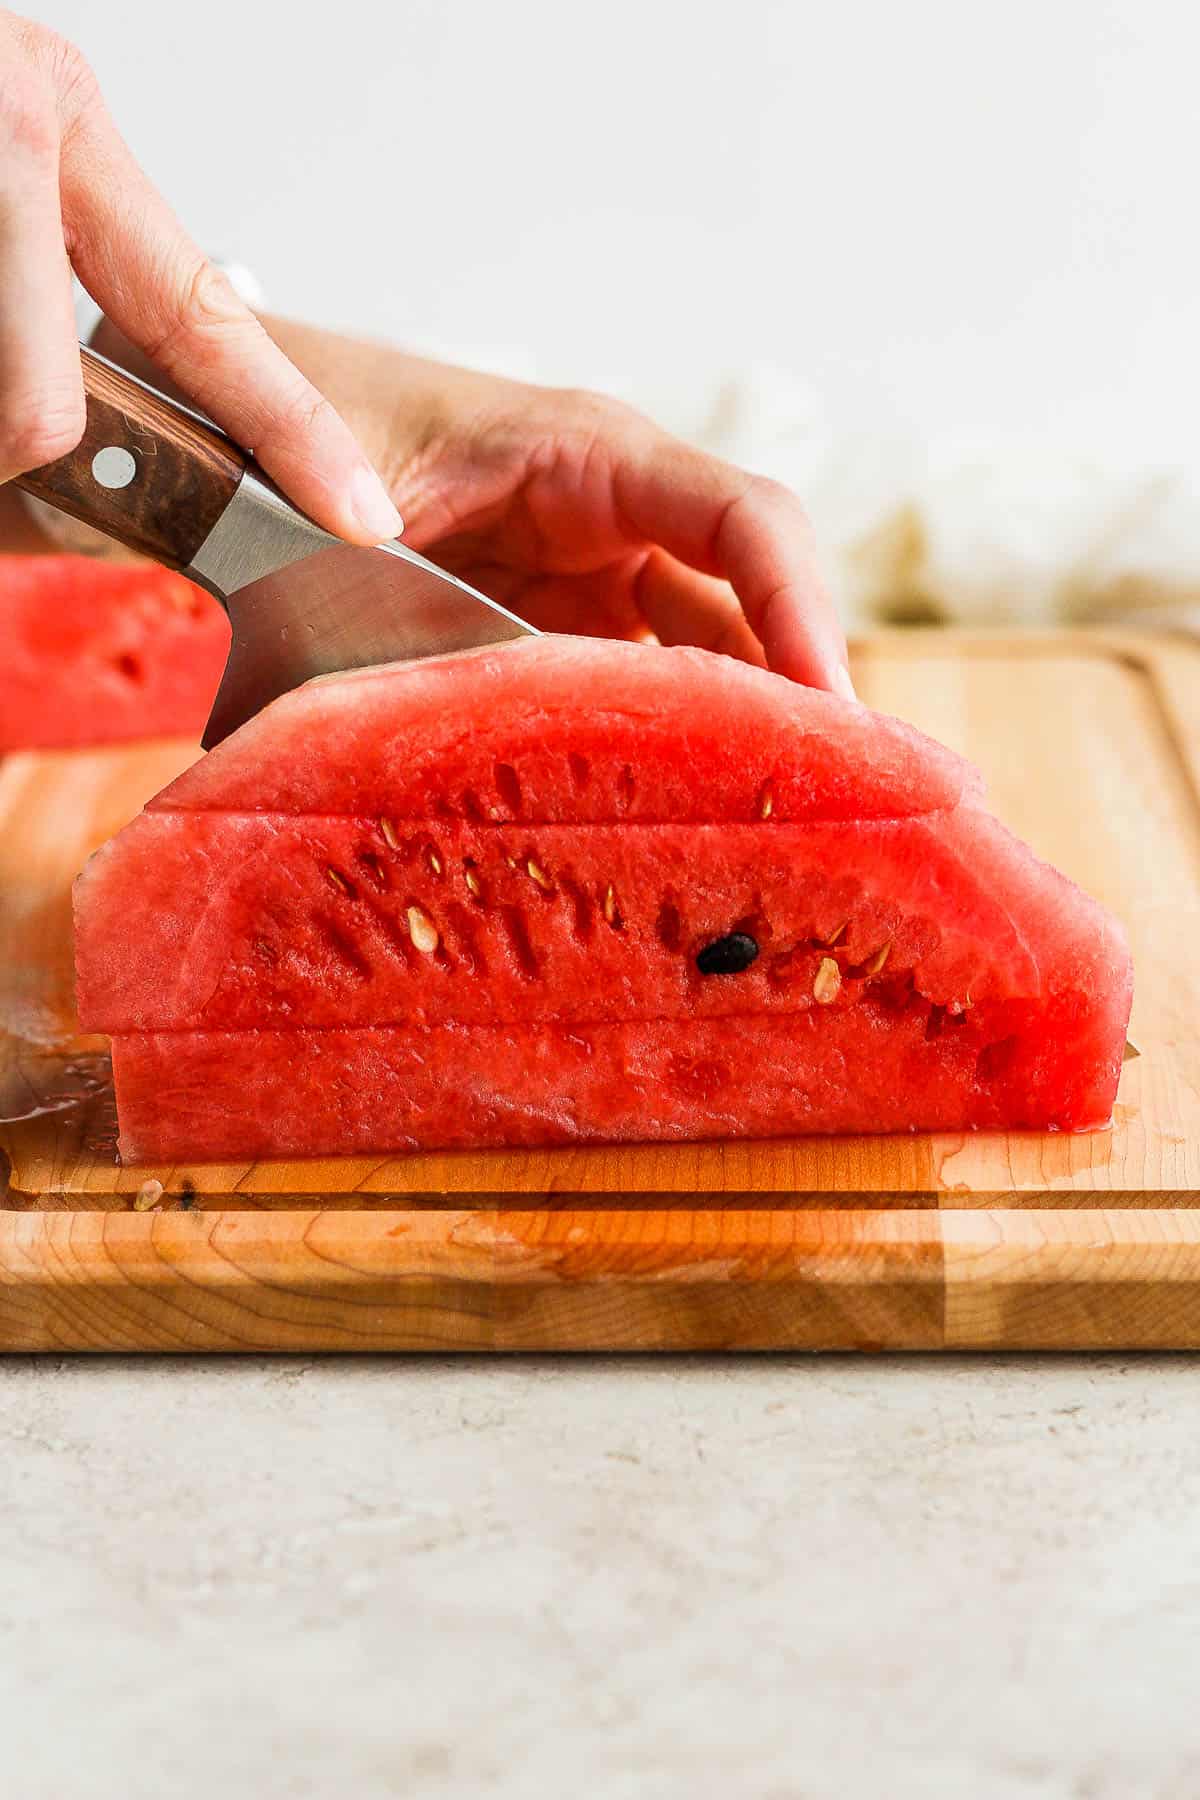 A quarter of a watermelon being cut into sticks.